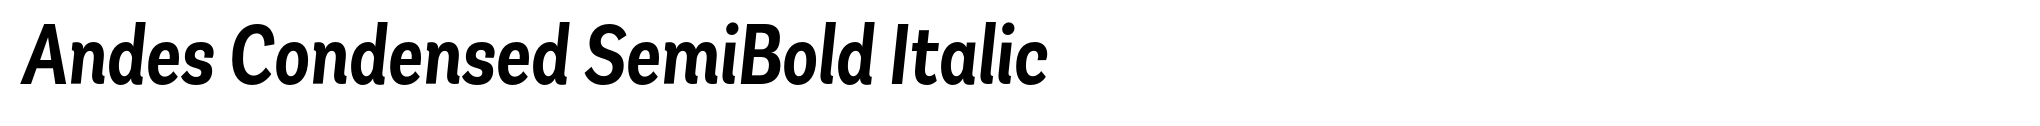 Andes Condensed SemiBold Italic image